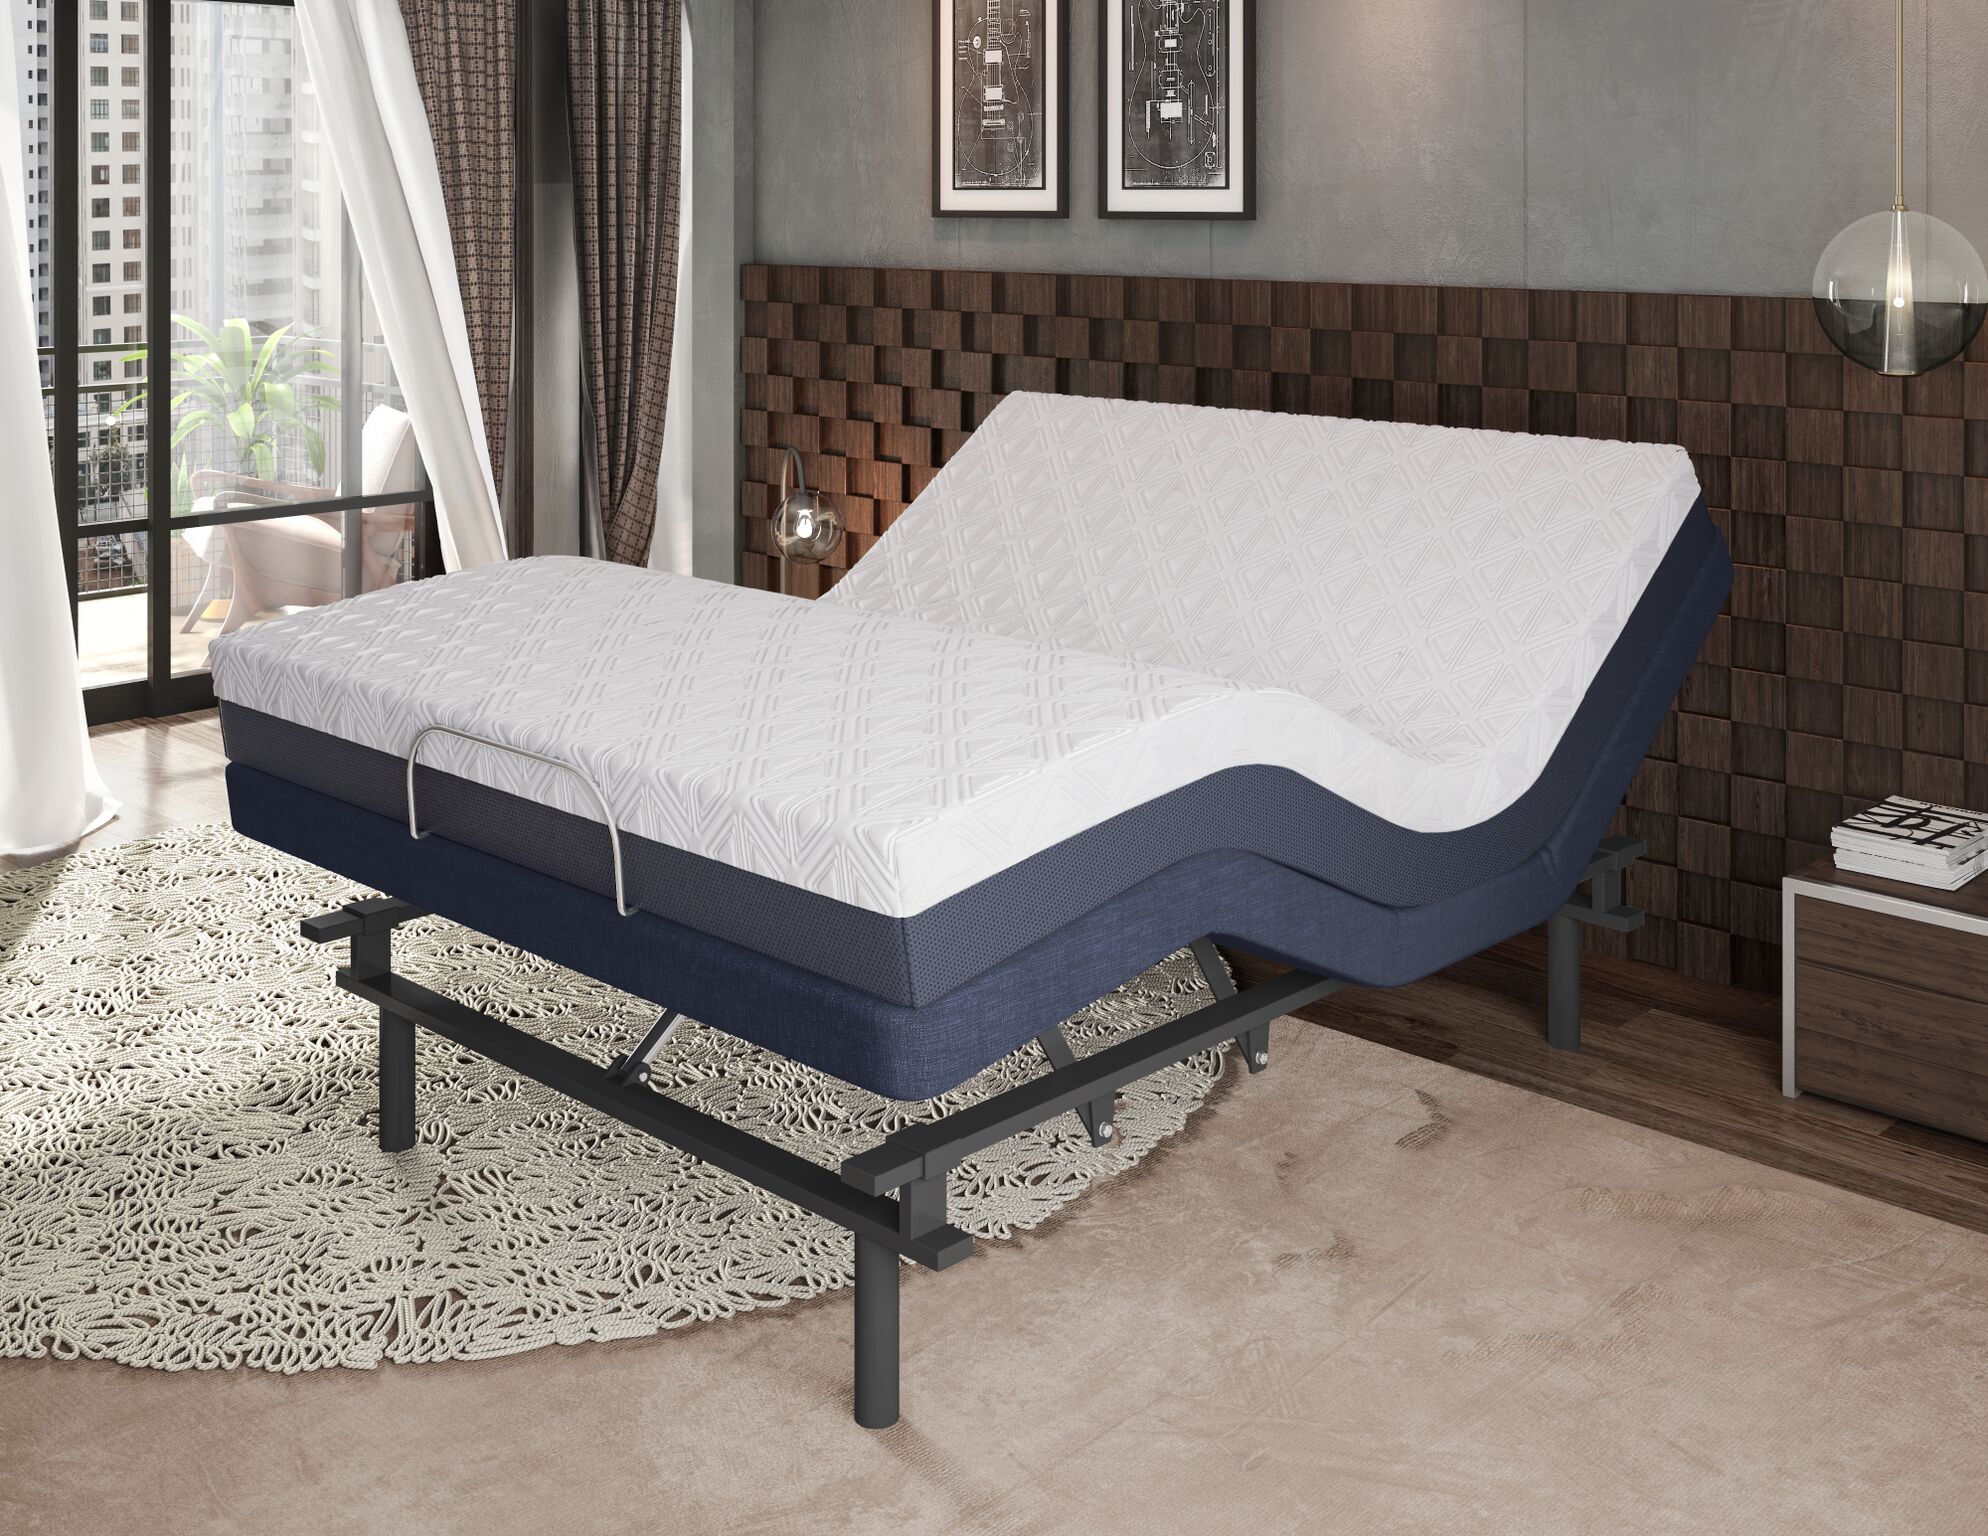 queen adjustable bed mattress only